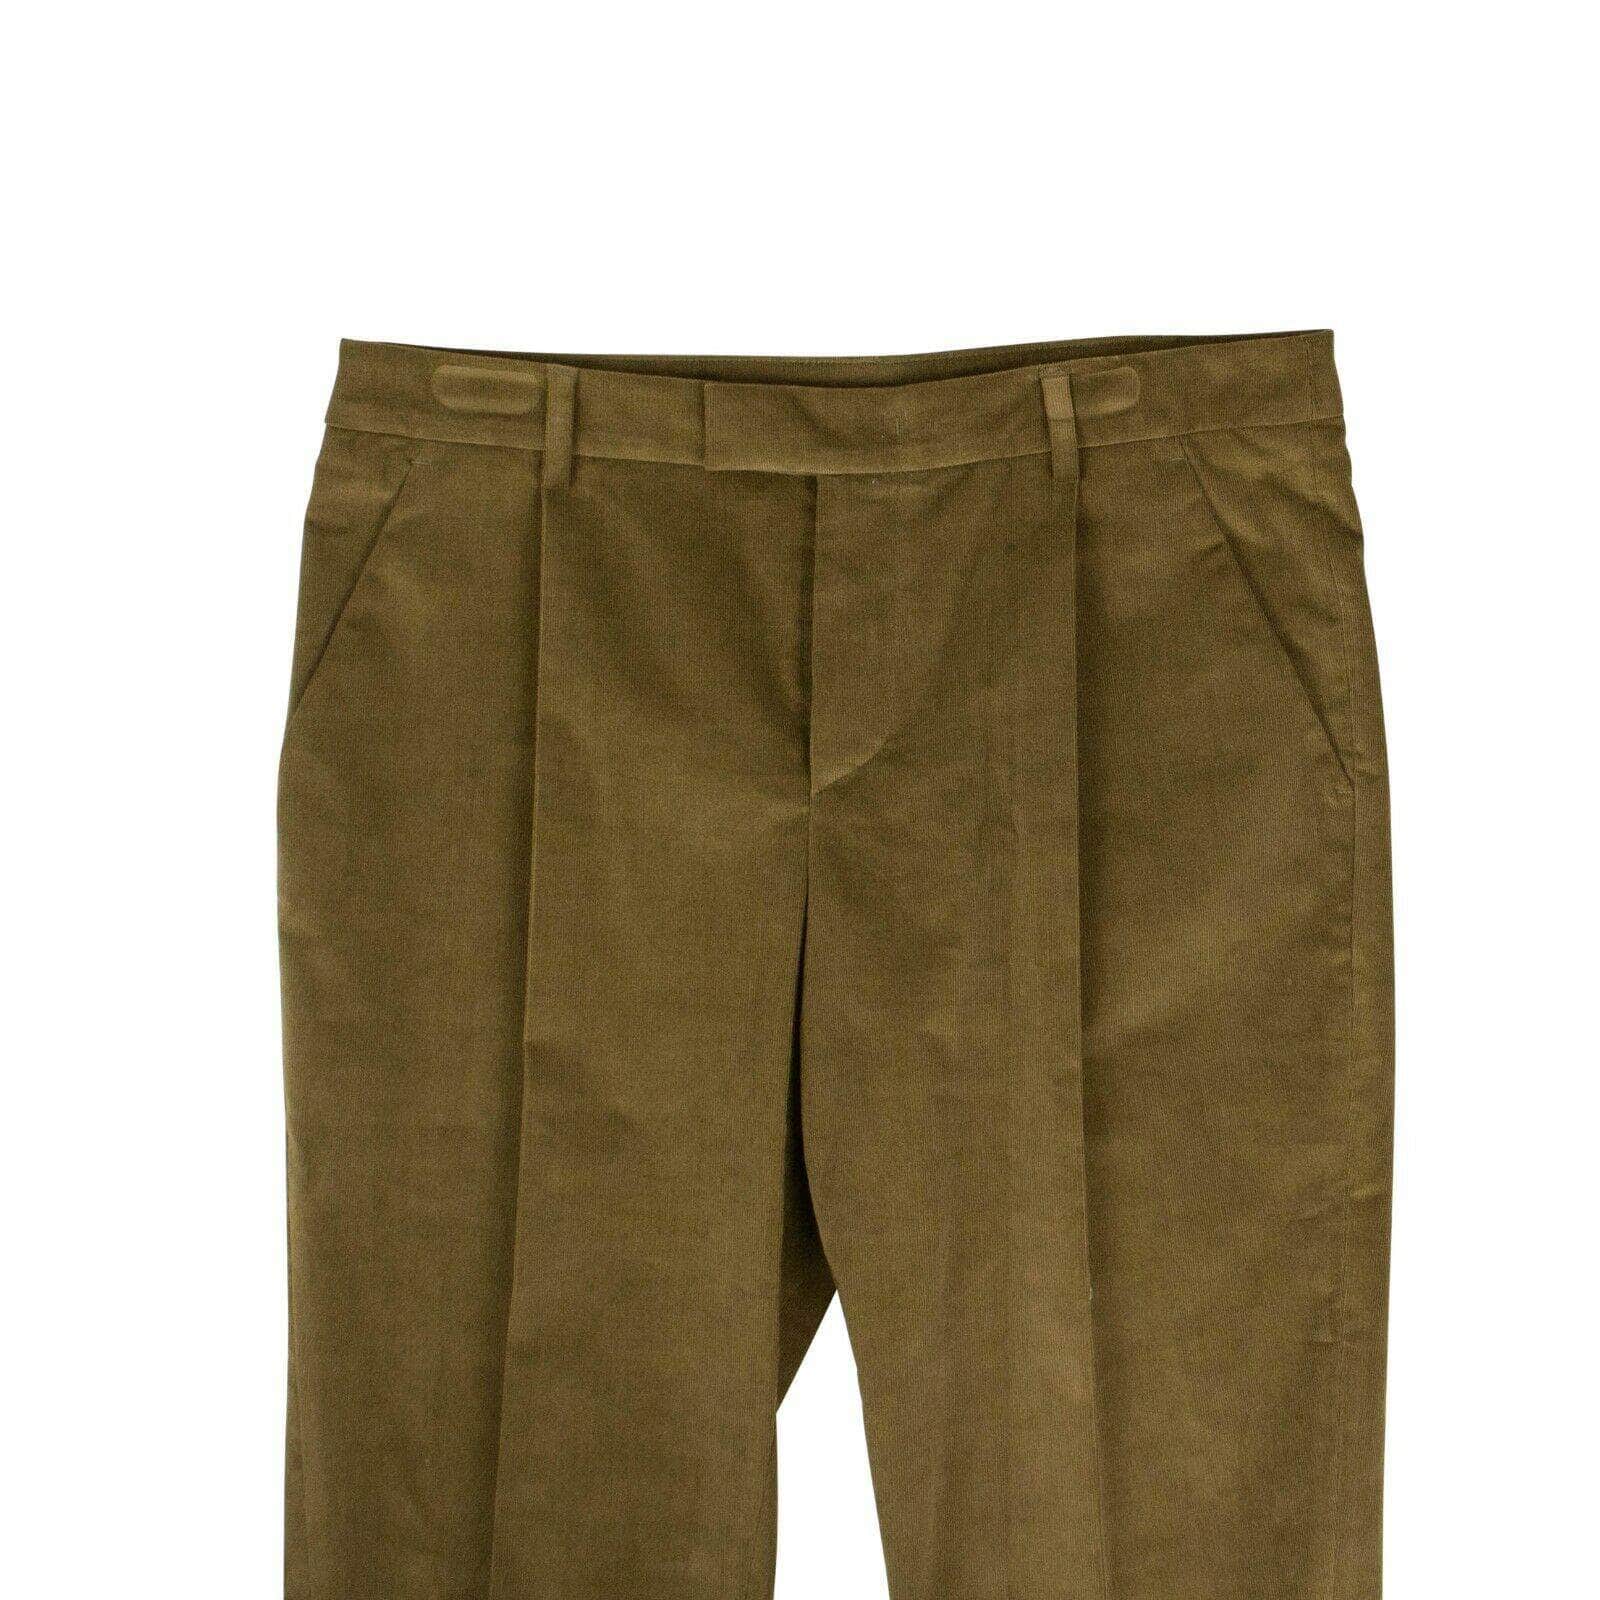 RED VALENTINO size-40, under-250 40 Olive Green Corduroy Tailored Pants 67V-510/40 67V-510/40